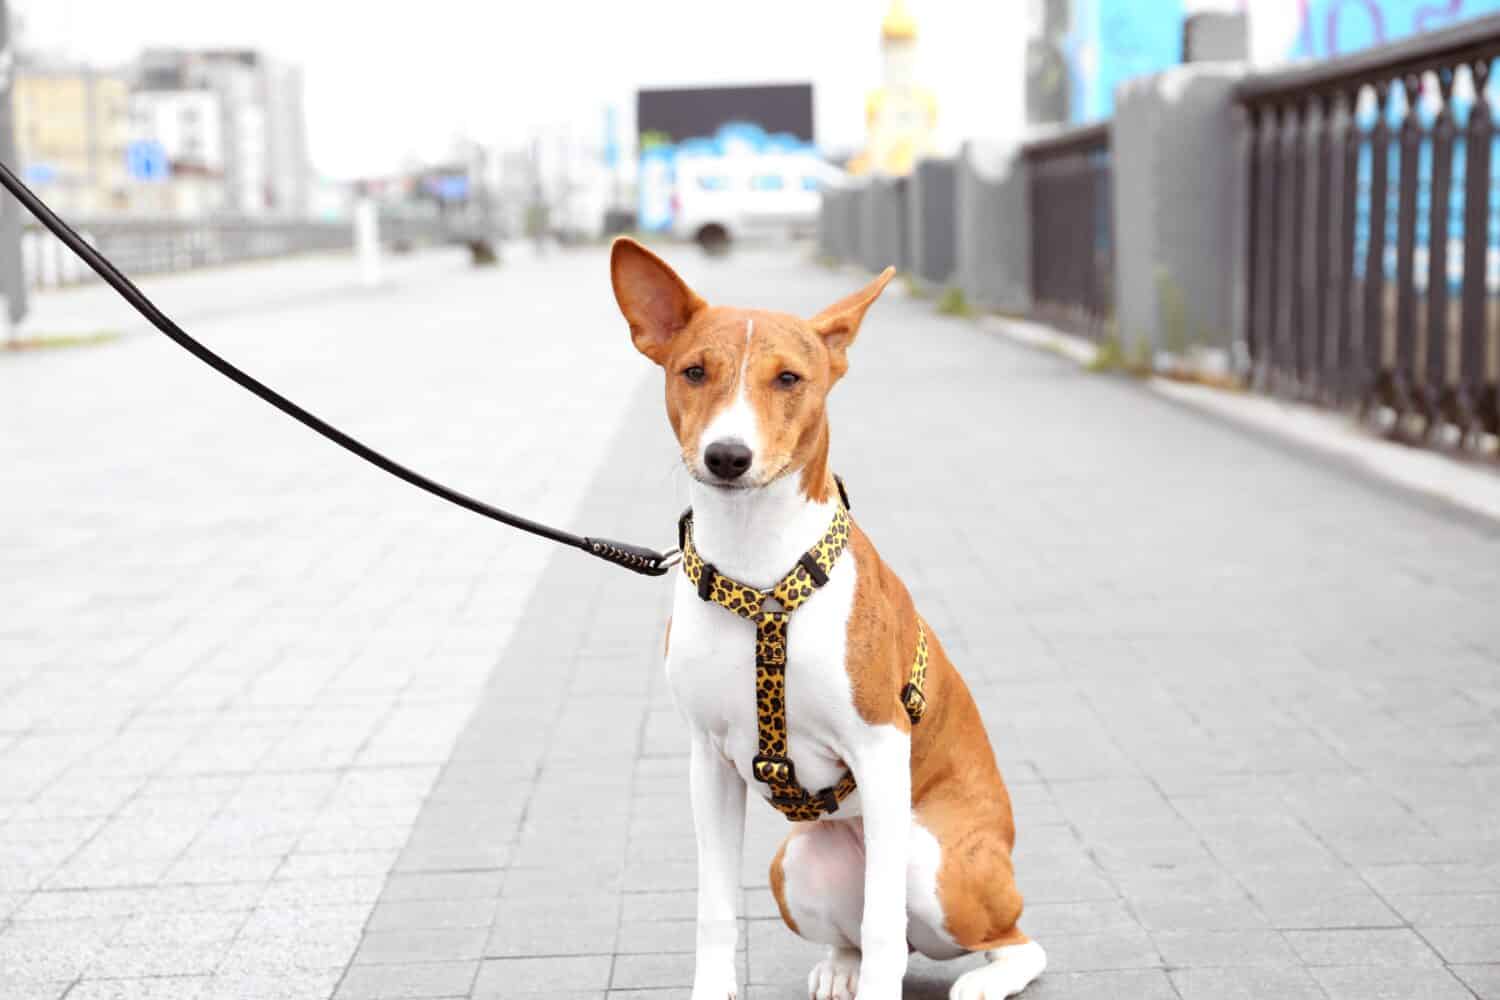 walking, harness, dog, basenji, city, animal, orange, cute, street, training